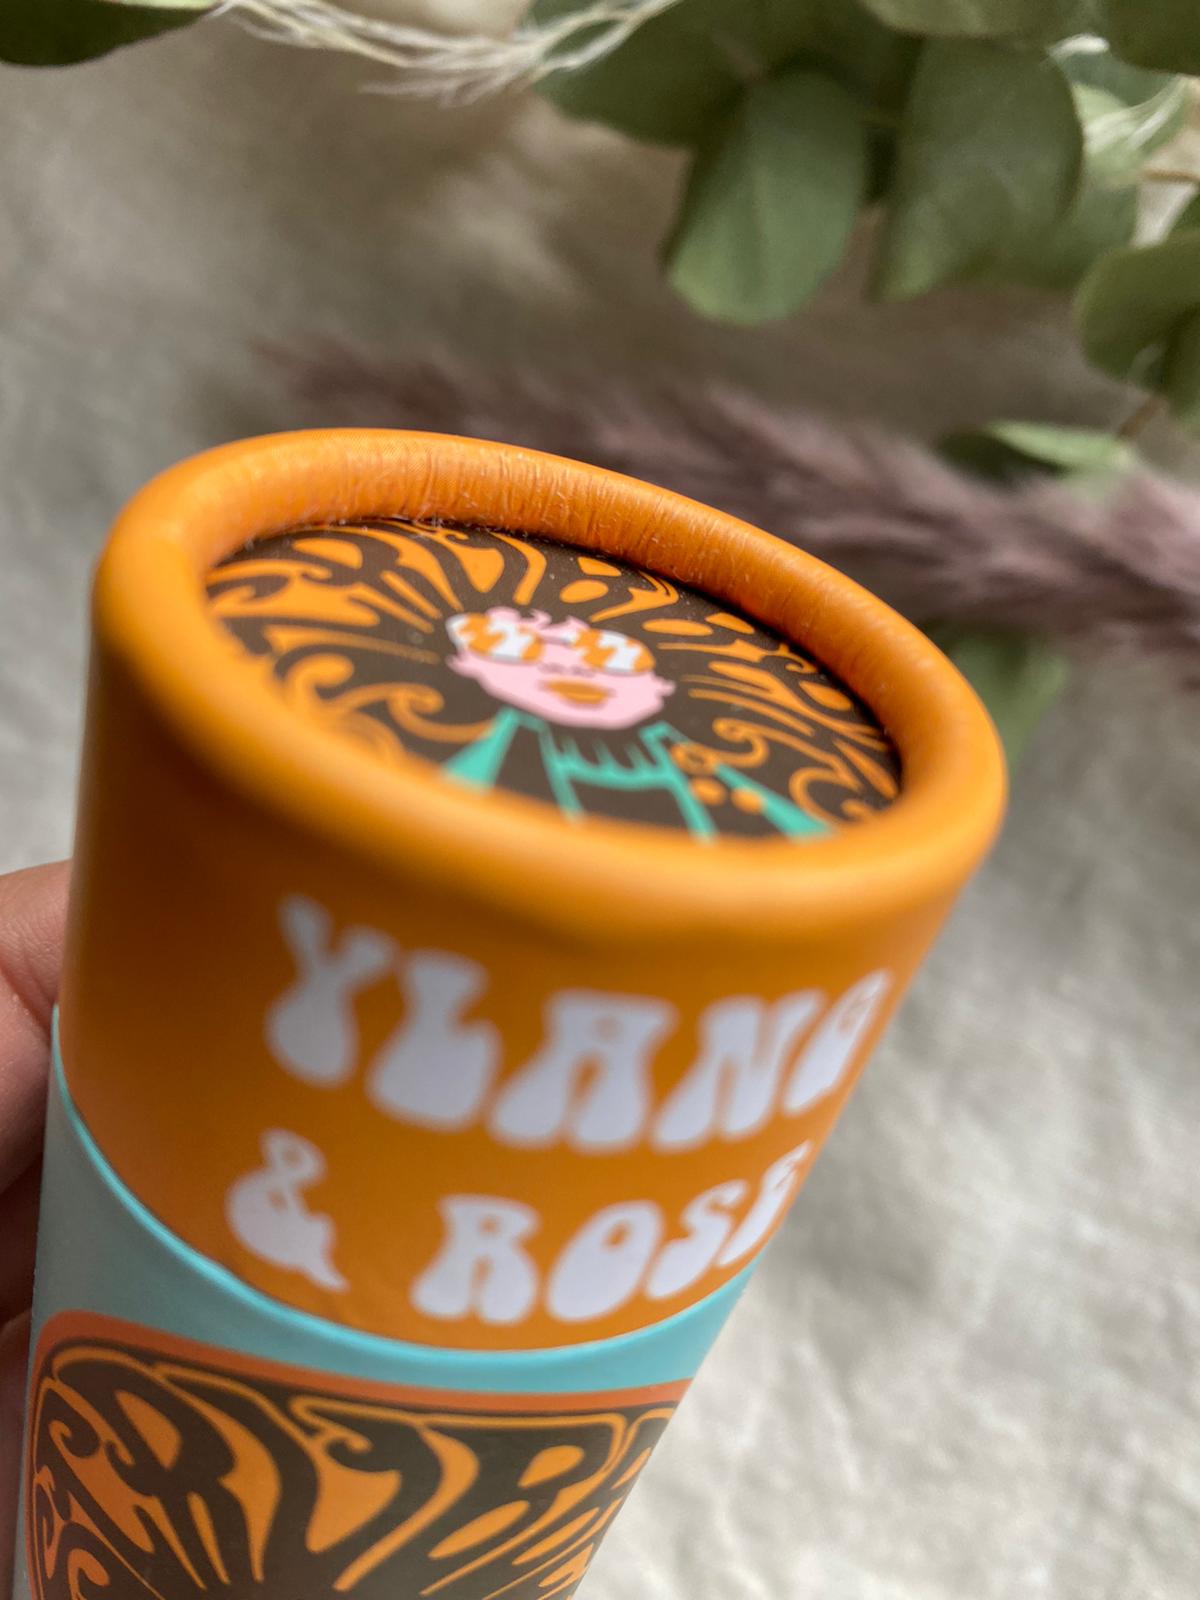 Wild - Refillable Deodorant - Orange Case + 1 Orange Zest - Rasta.Farmers